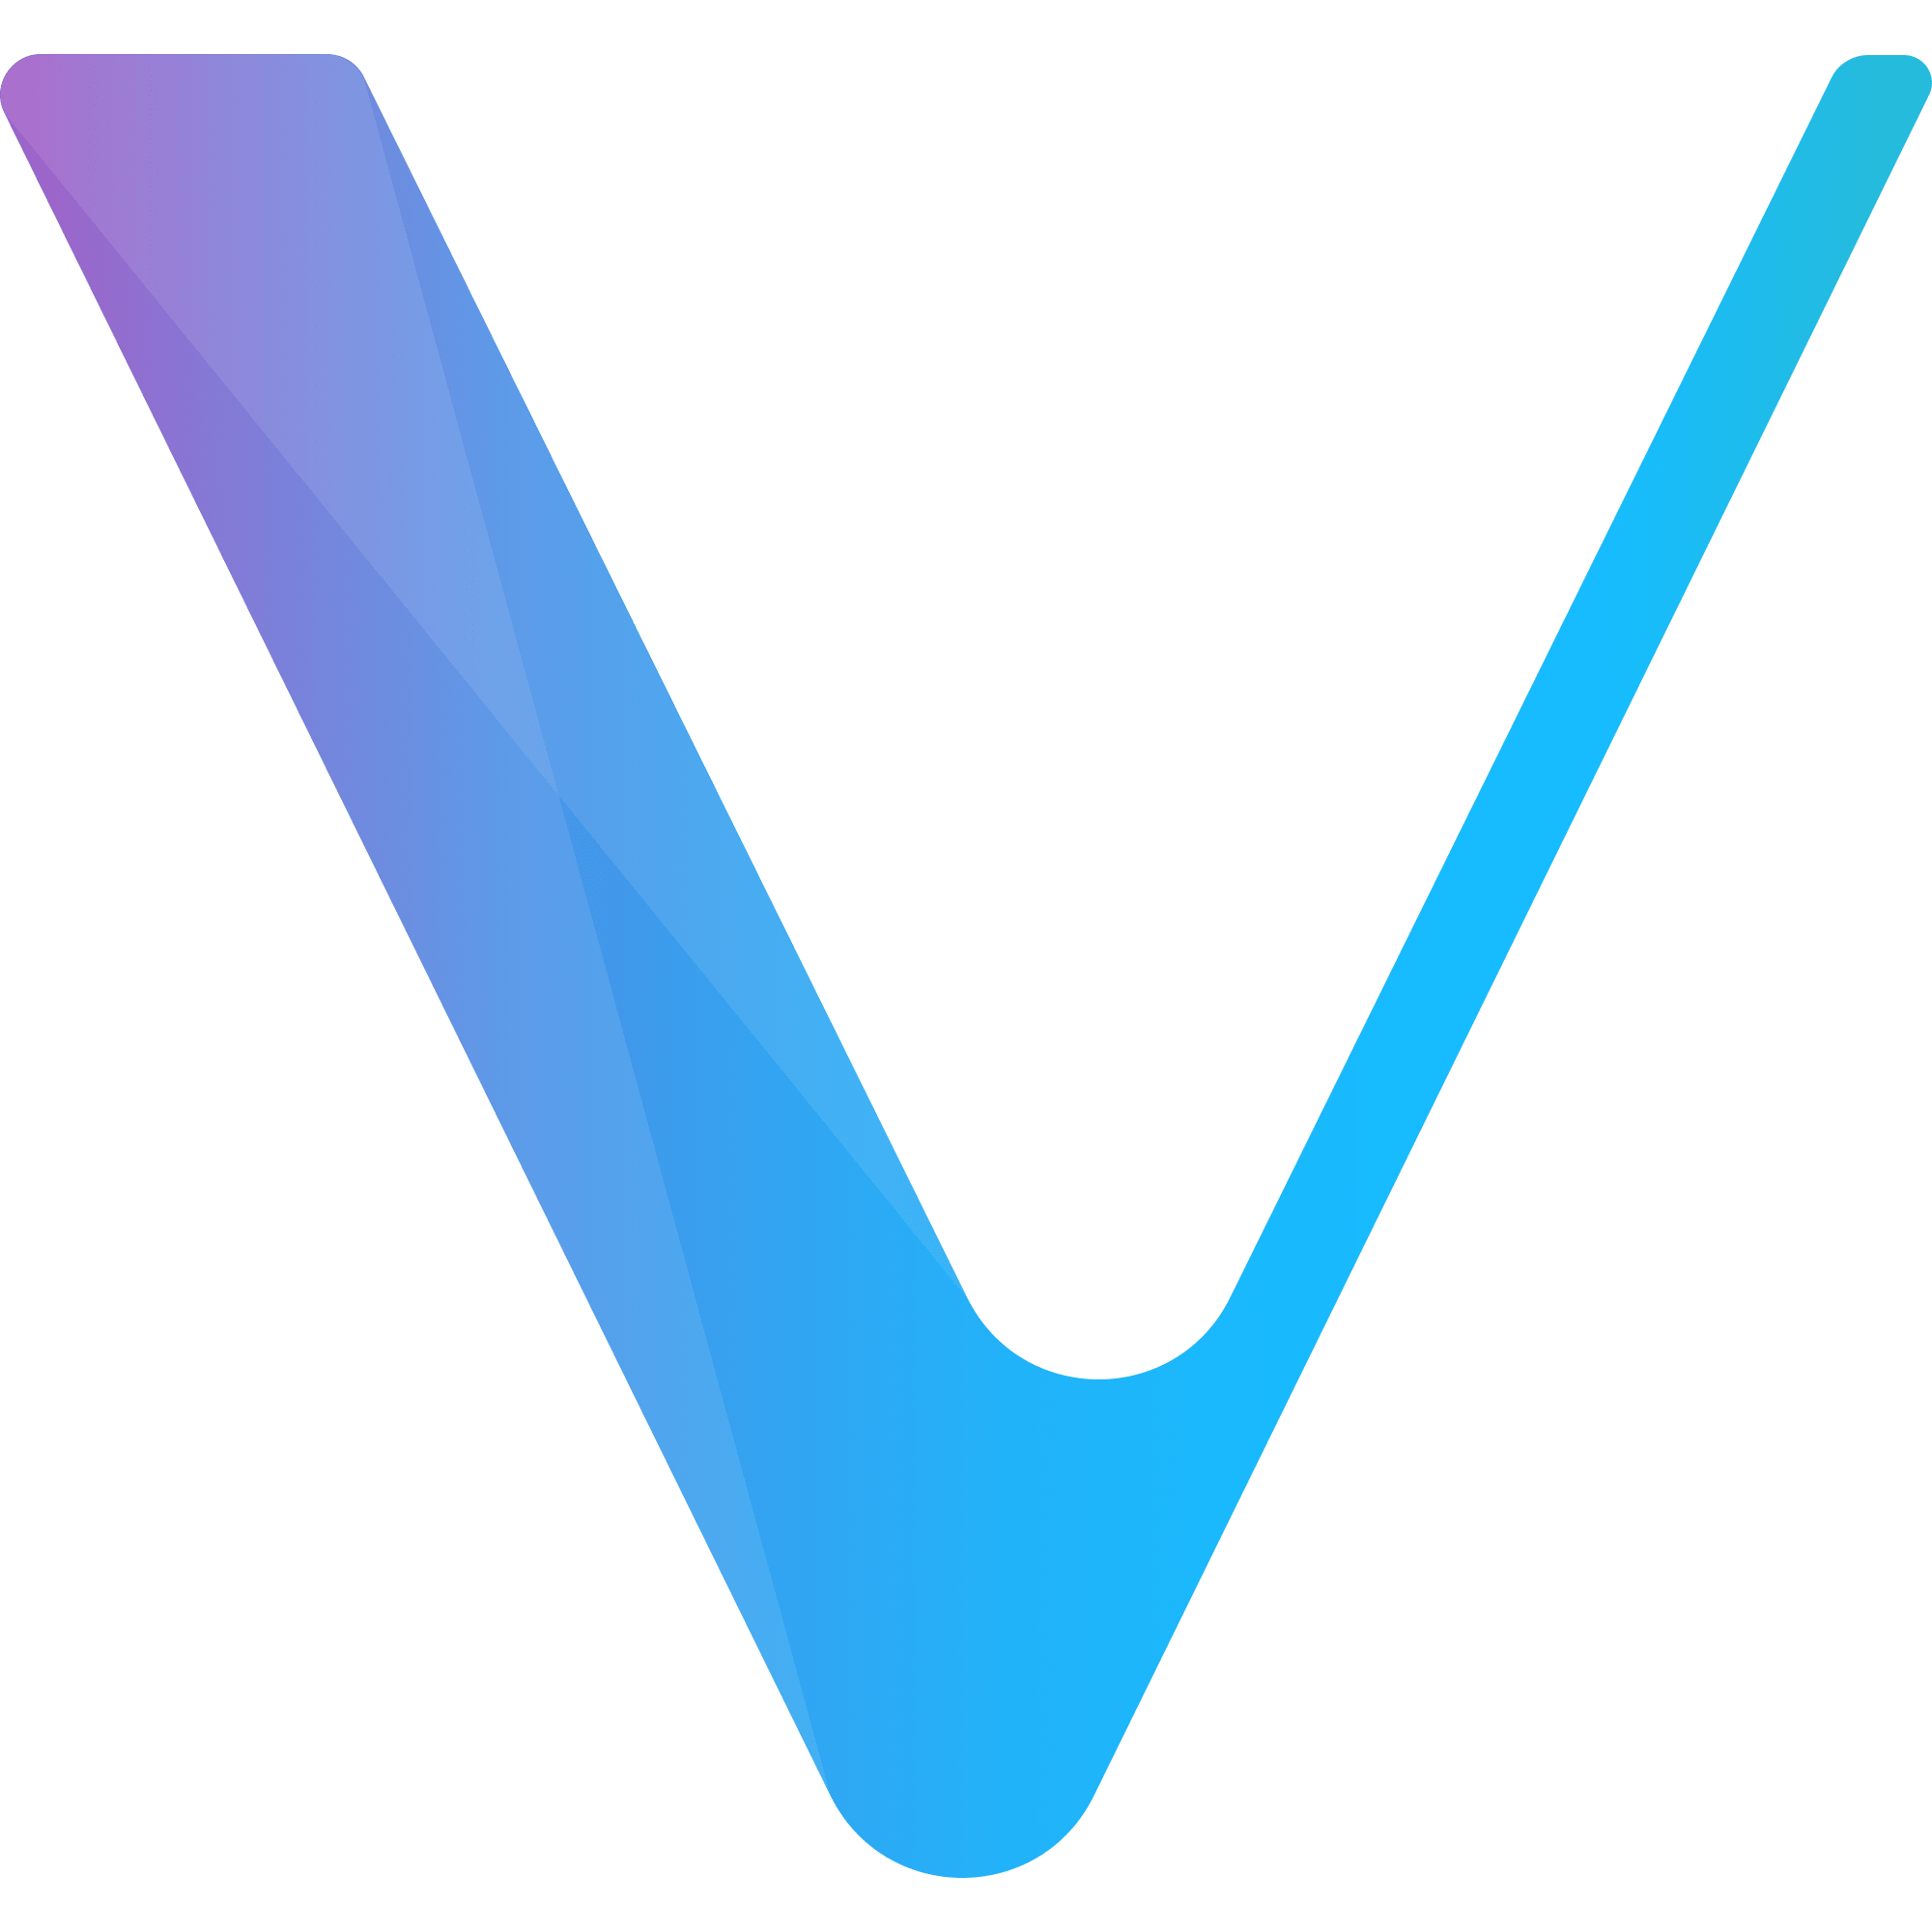 VeChain logo in png format